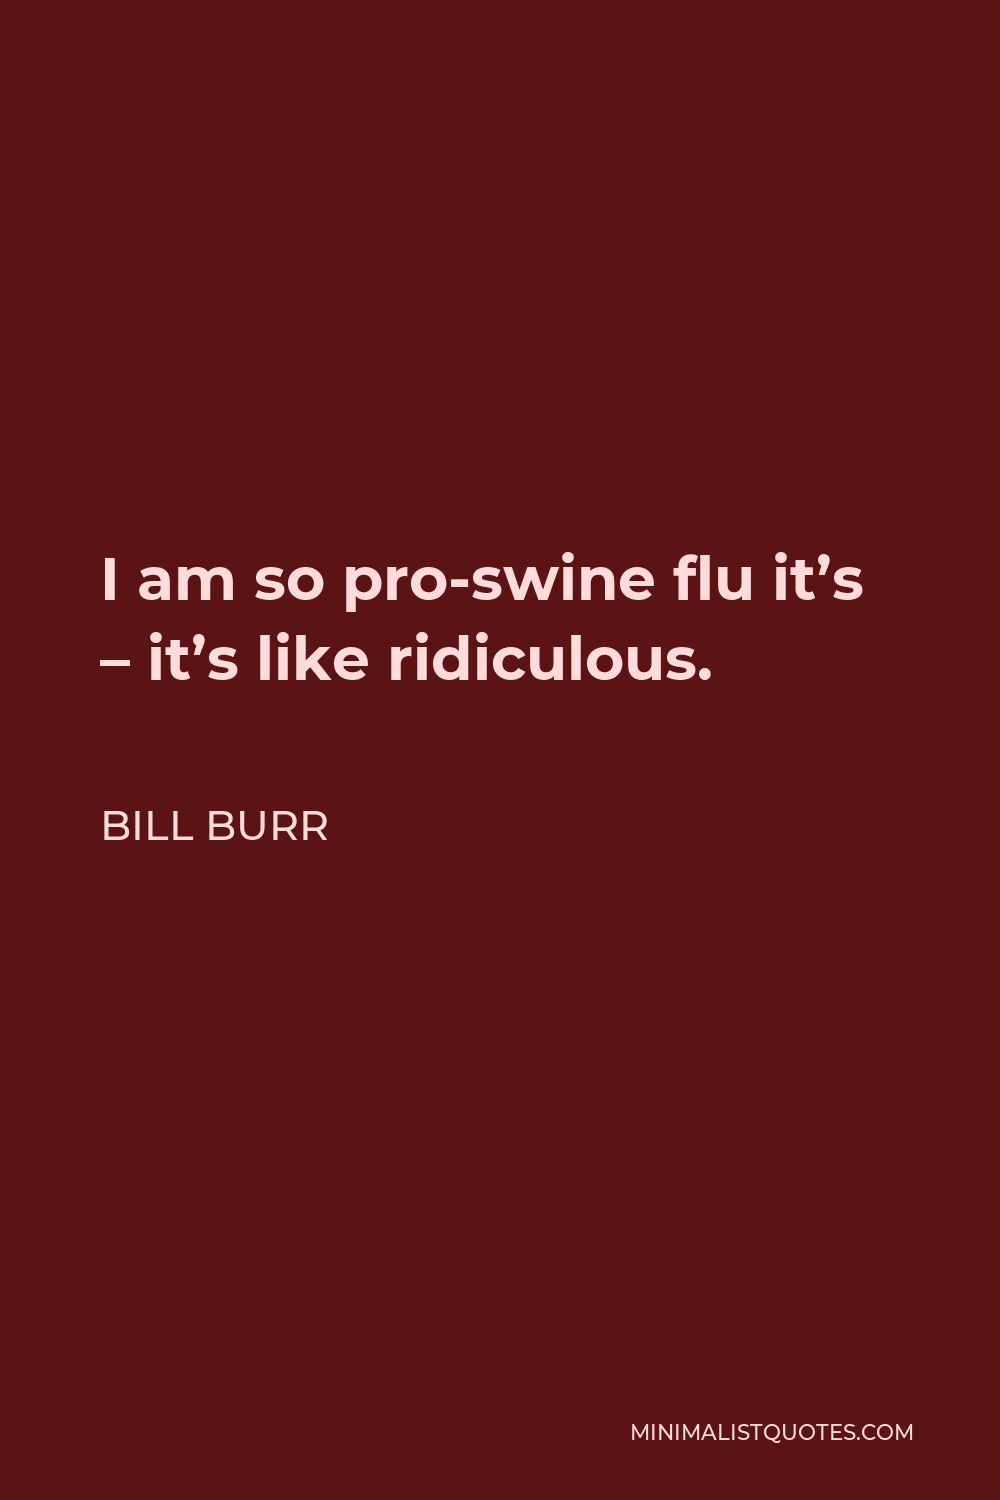 Bill Burr Quote - I am so pro-swine flu it’s – it’s like ridiculous.